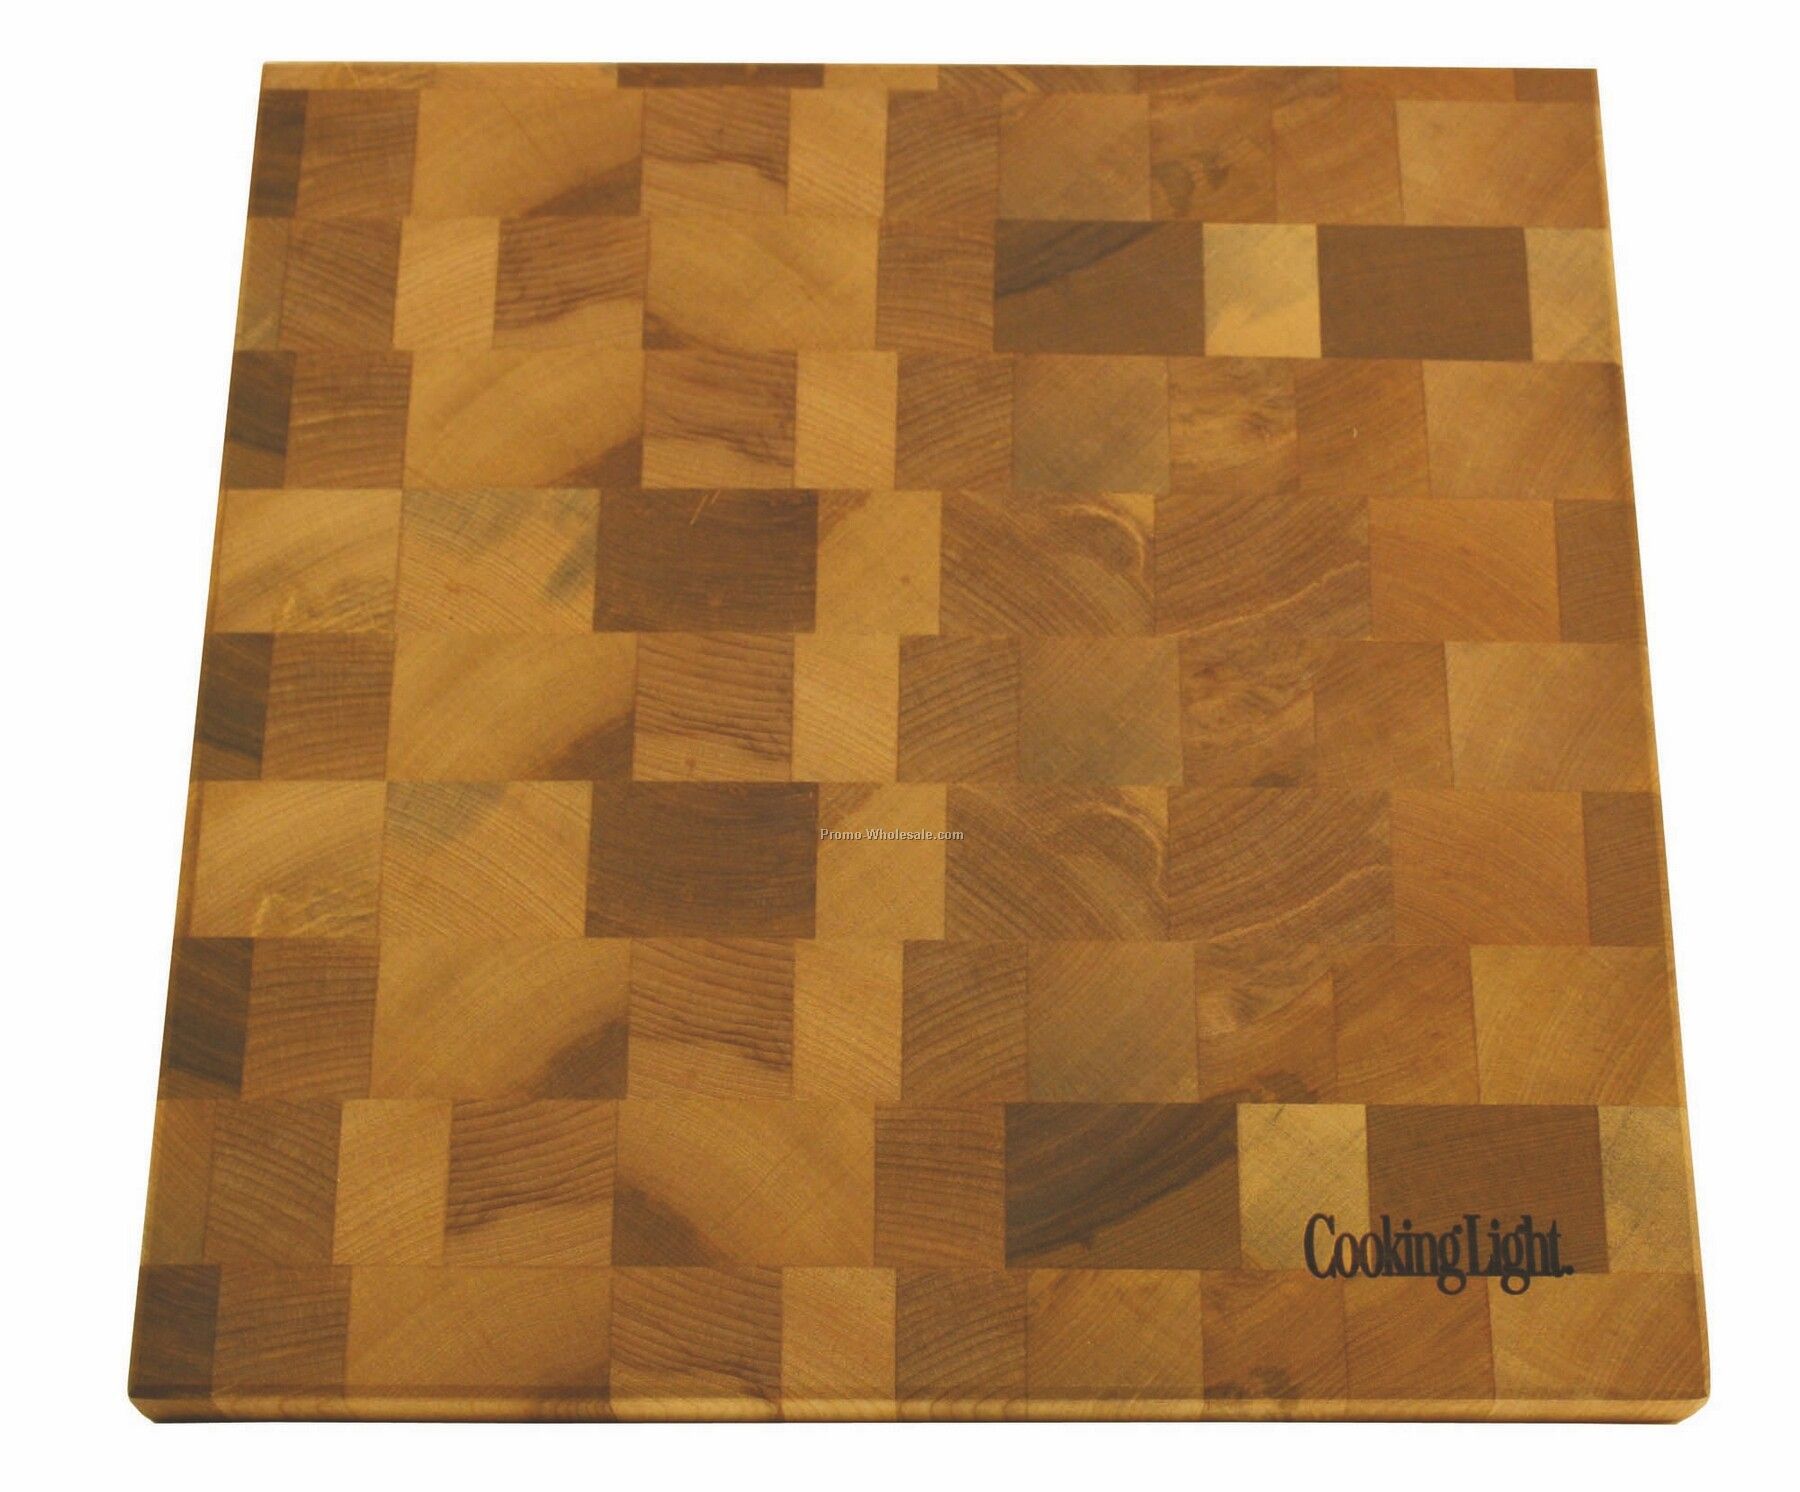 11 3/4" X 11 3/4" X 3/4" Timeless Timber Cutting Board